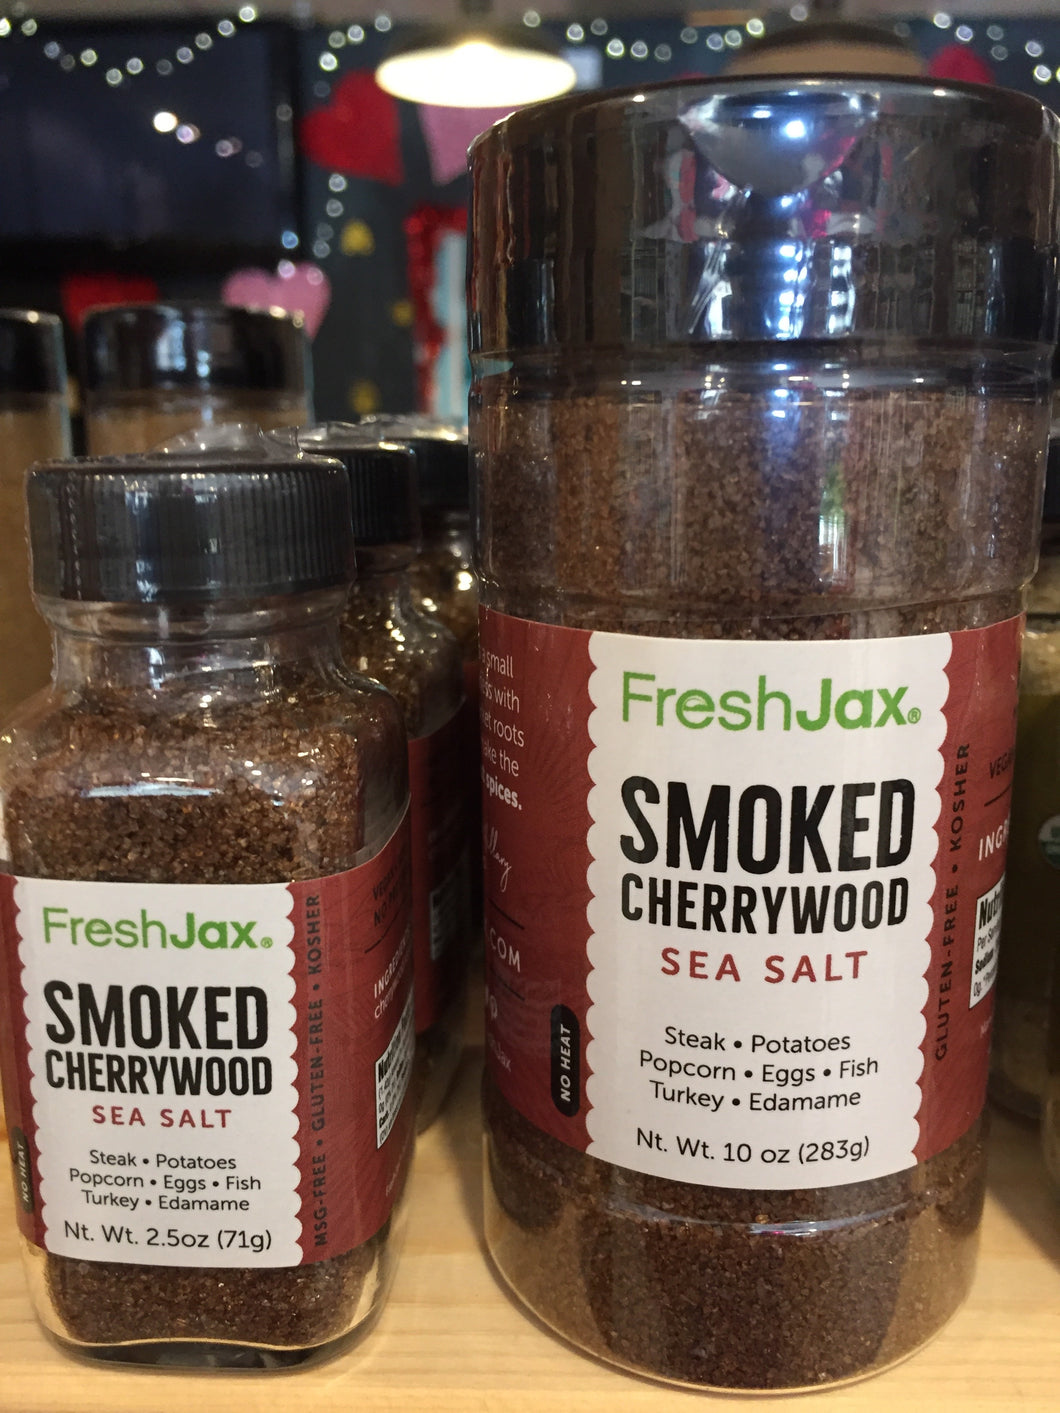 Smoked Cherrywood Sea Salt: FreshJax at Hoby’s